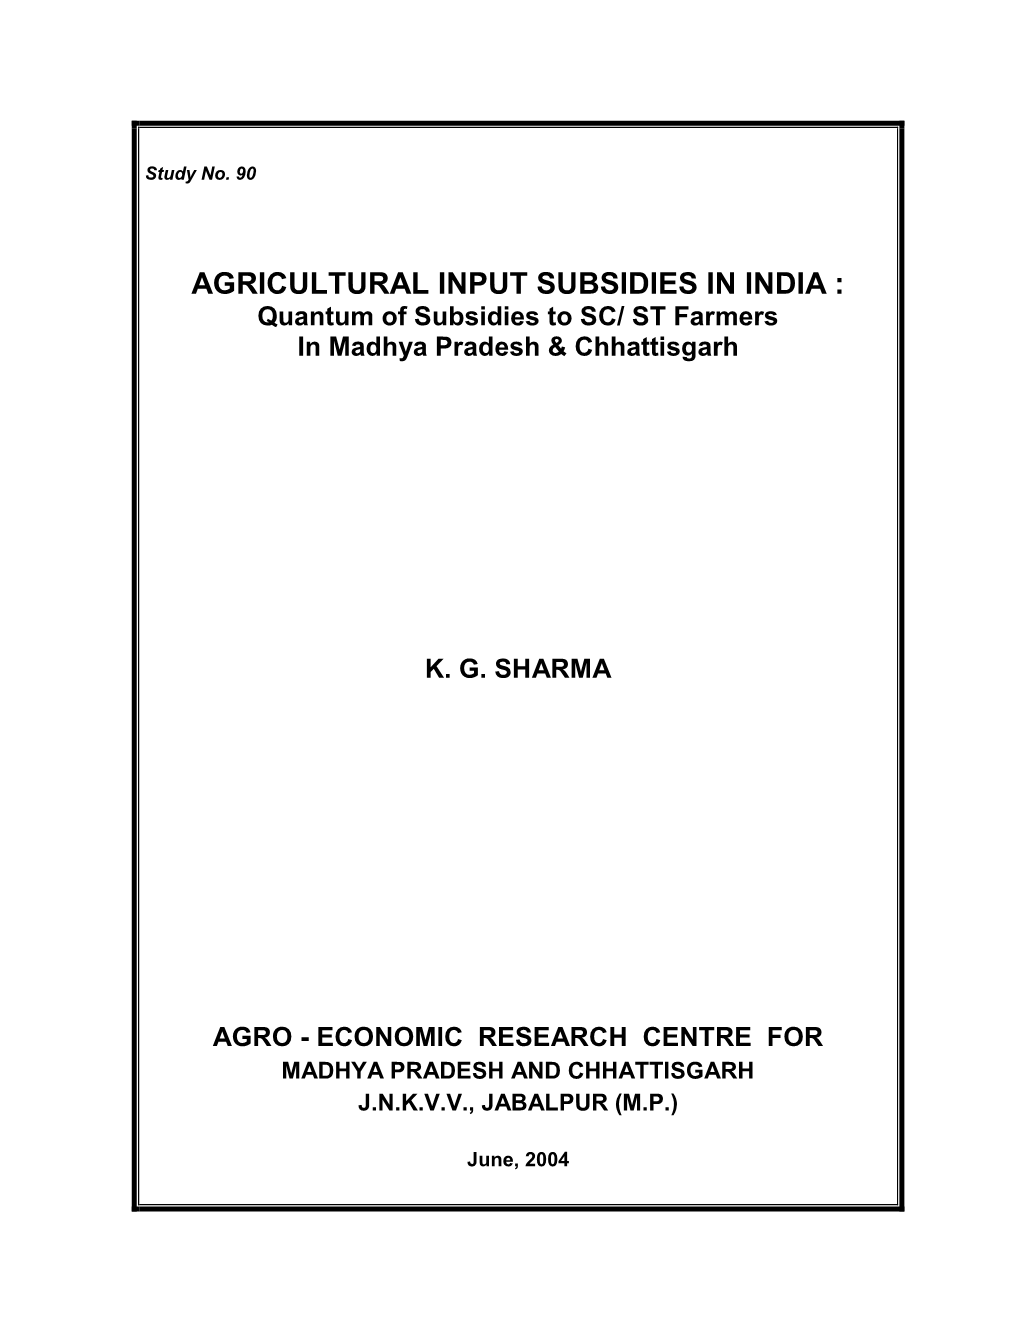 AGRICULTURAL INPUT SUBSIDIES in INDIA : Quantum of Subsidies to SC/ ST Farmers in Madhya Pradesh & Chhattisgarh